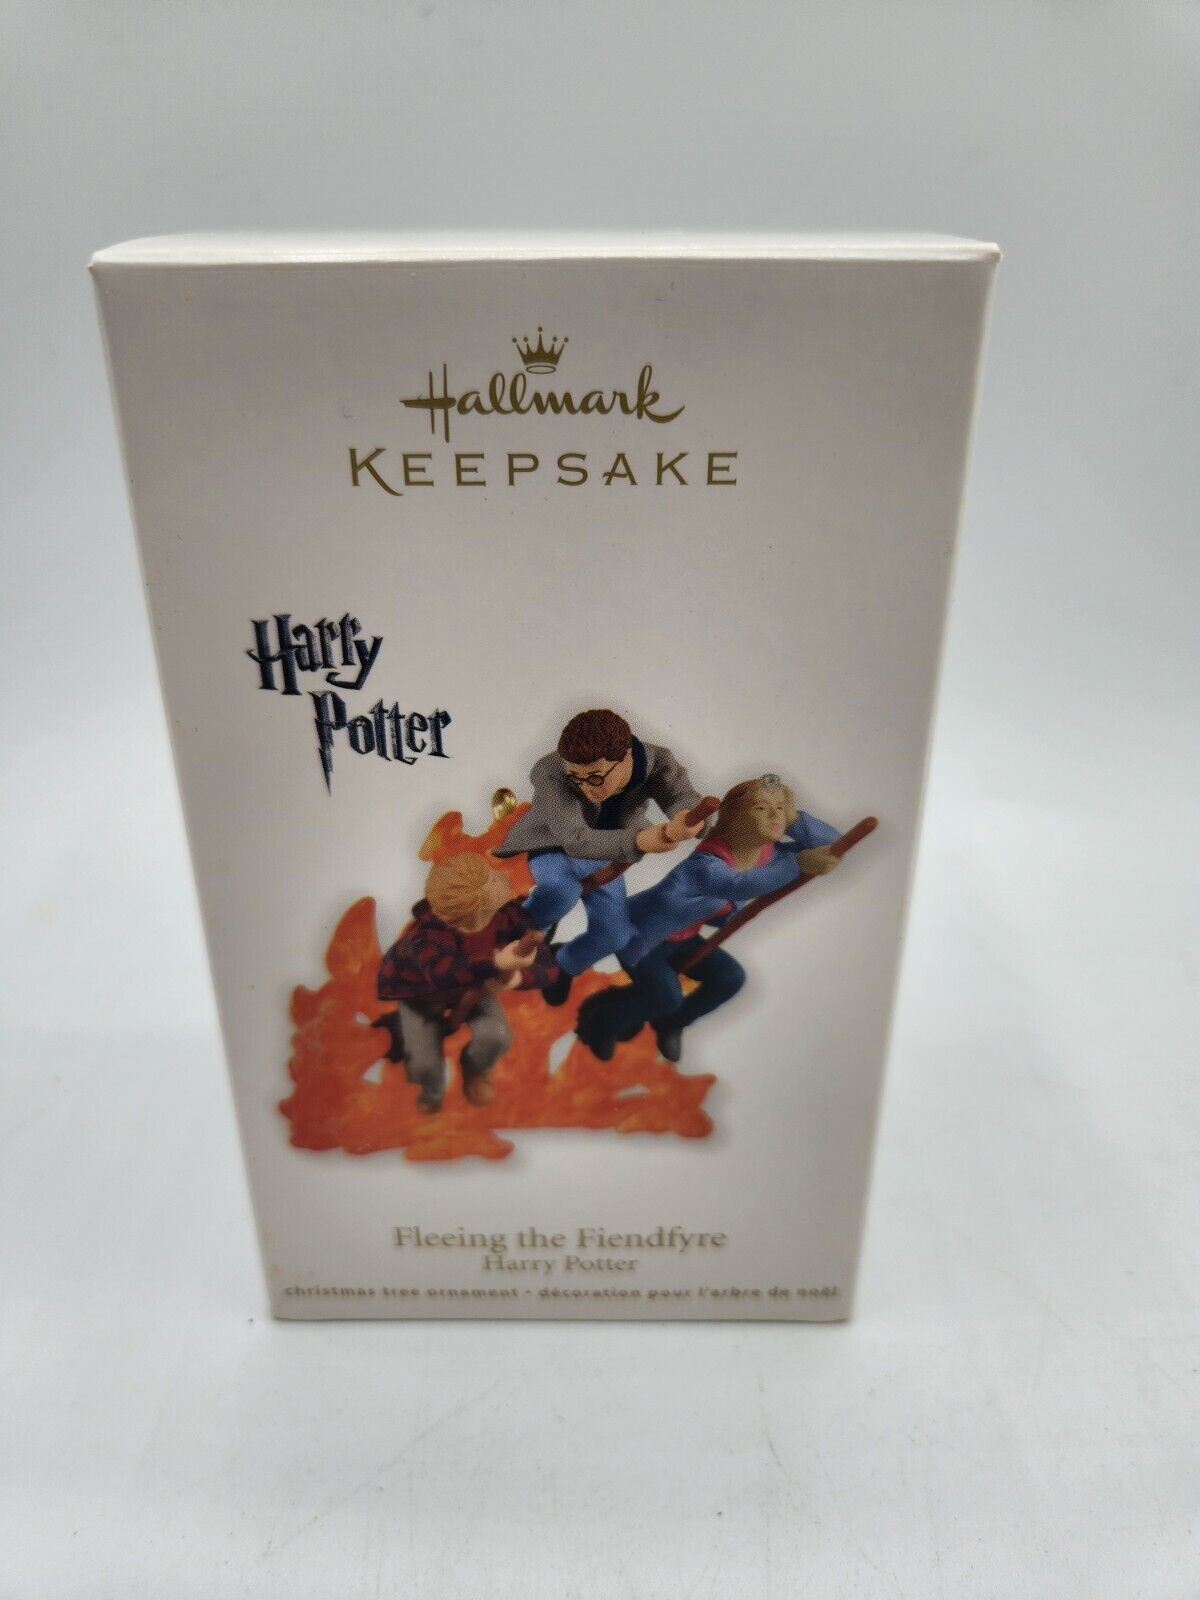 Hallmark Keepsake Harry Potter Ornament - Fleeing the Fiendfyre - New